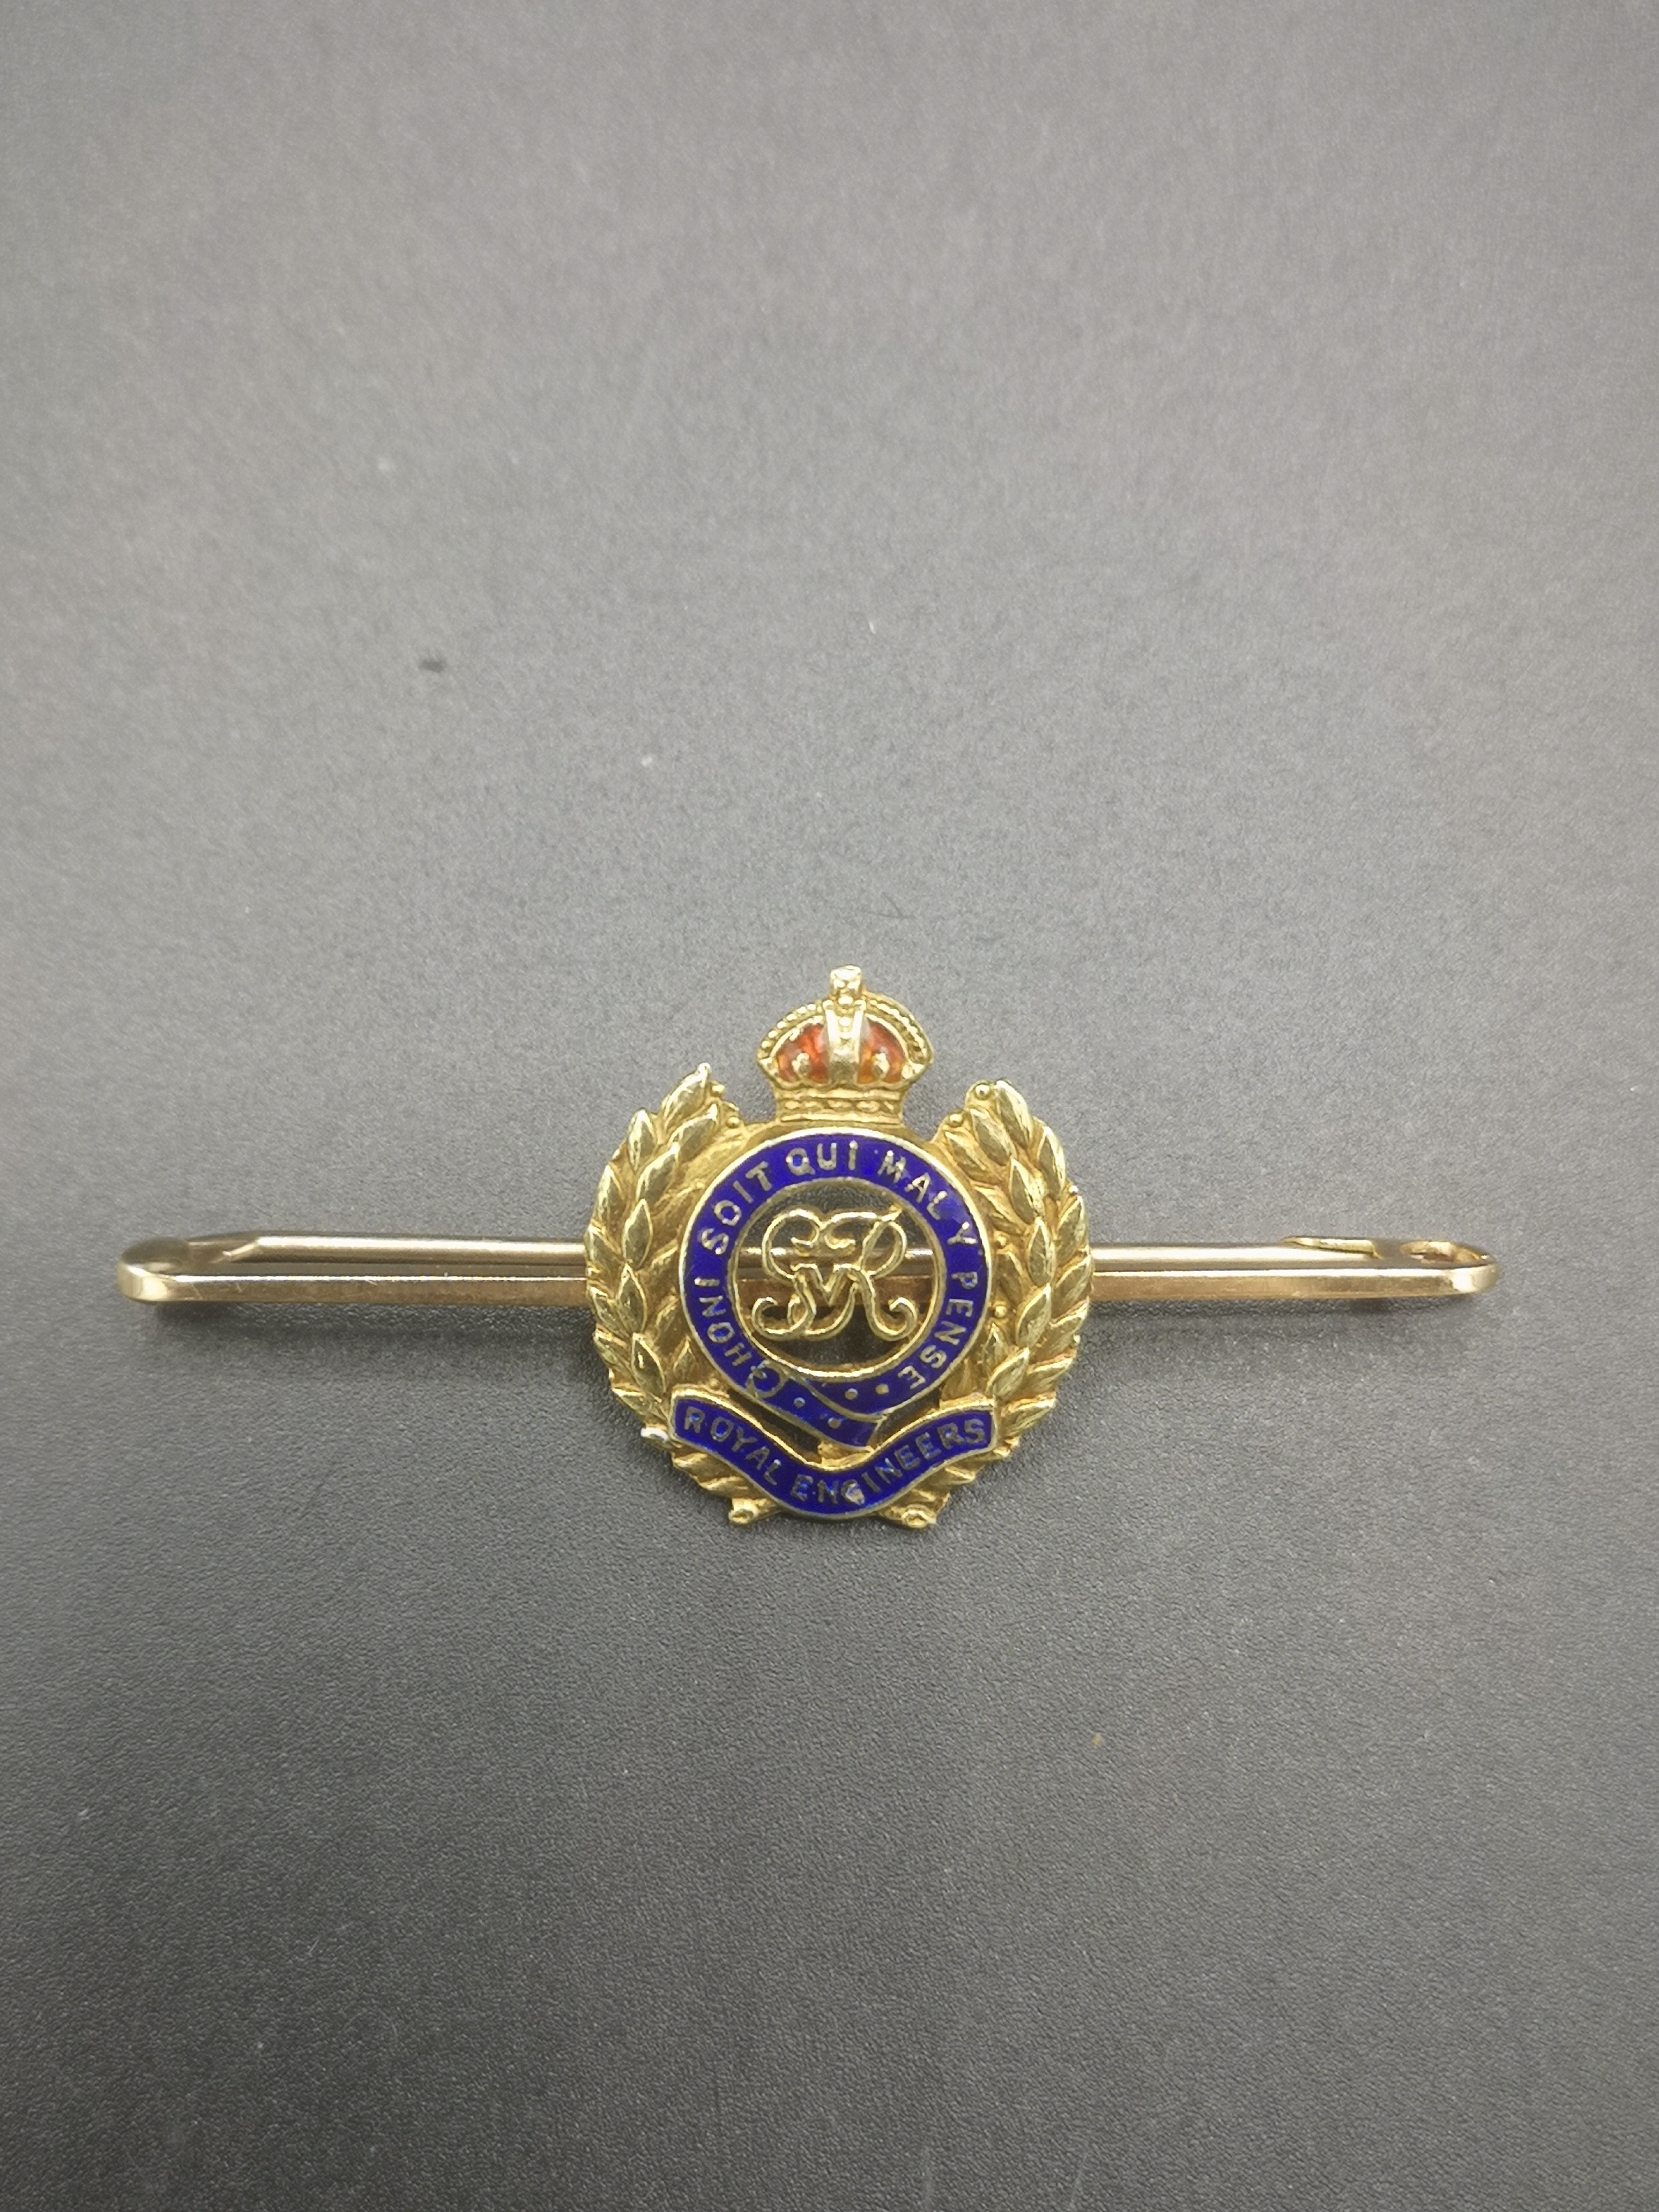 15ct gold Royal Engineers bar brooch - Image 2 of 3